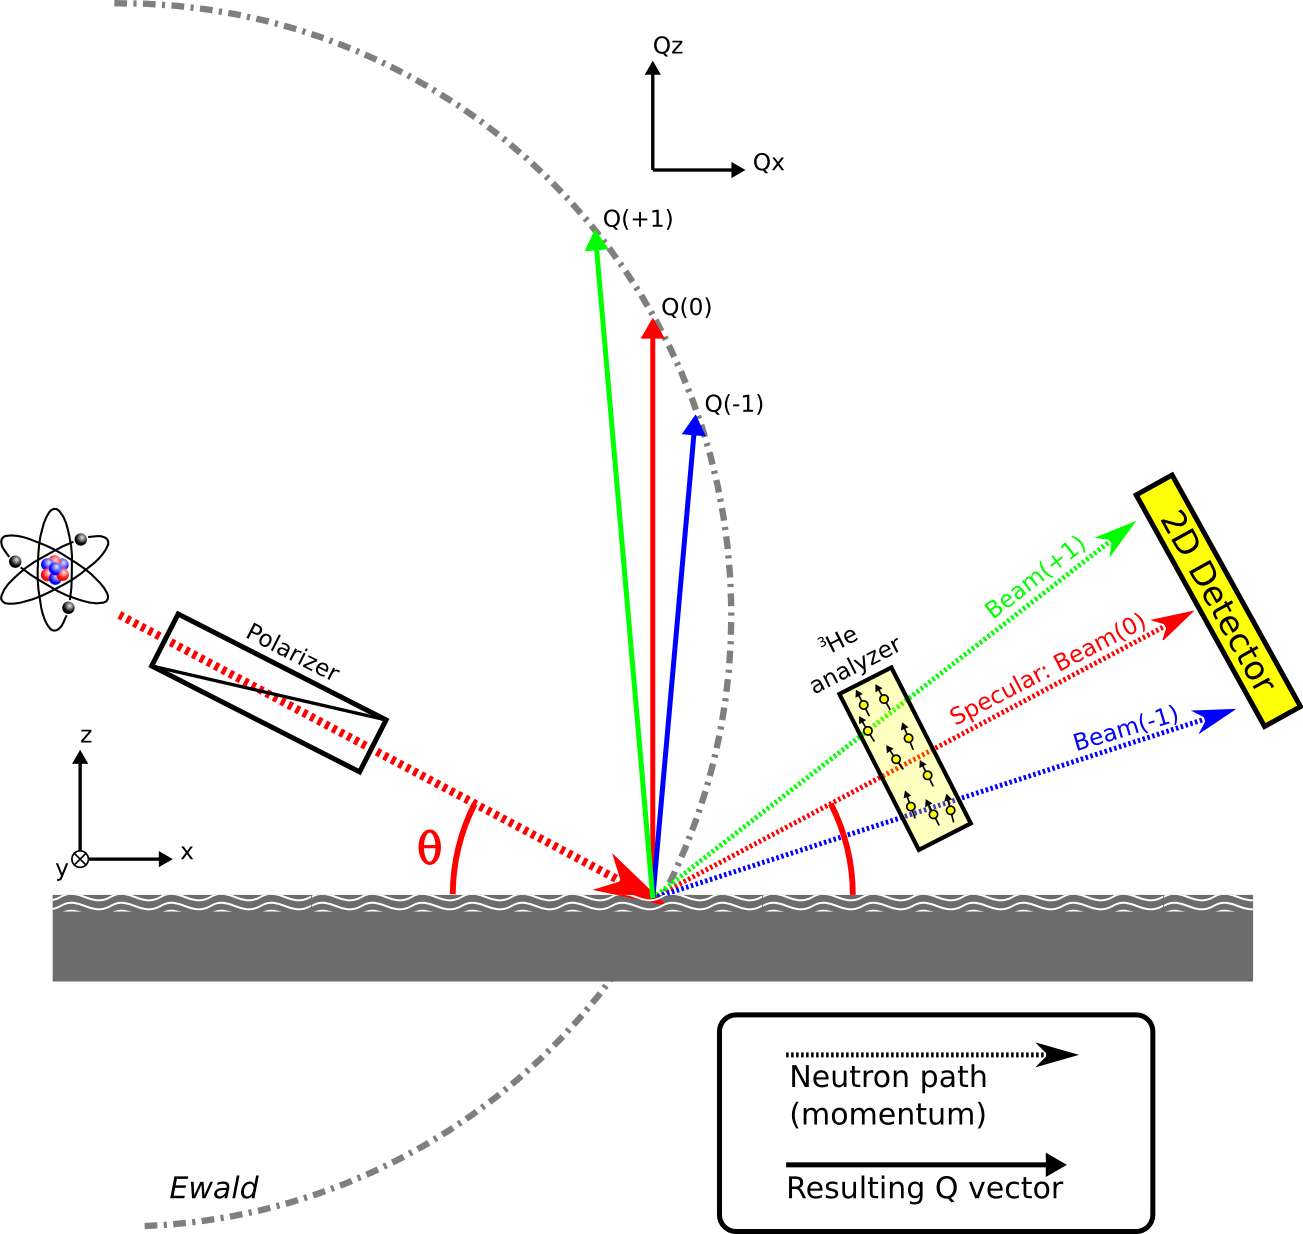 small angle neutron scattering resolution calculator